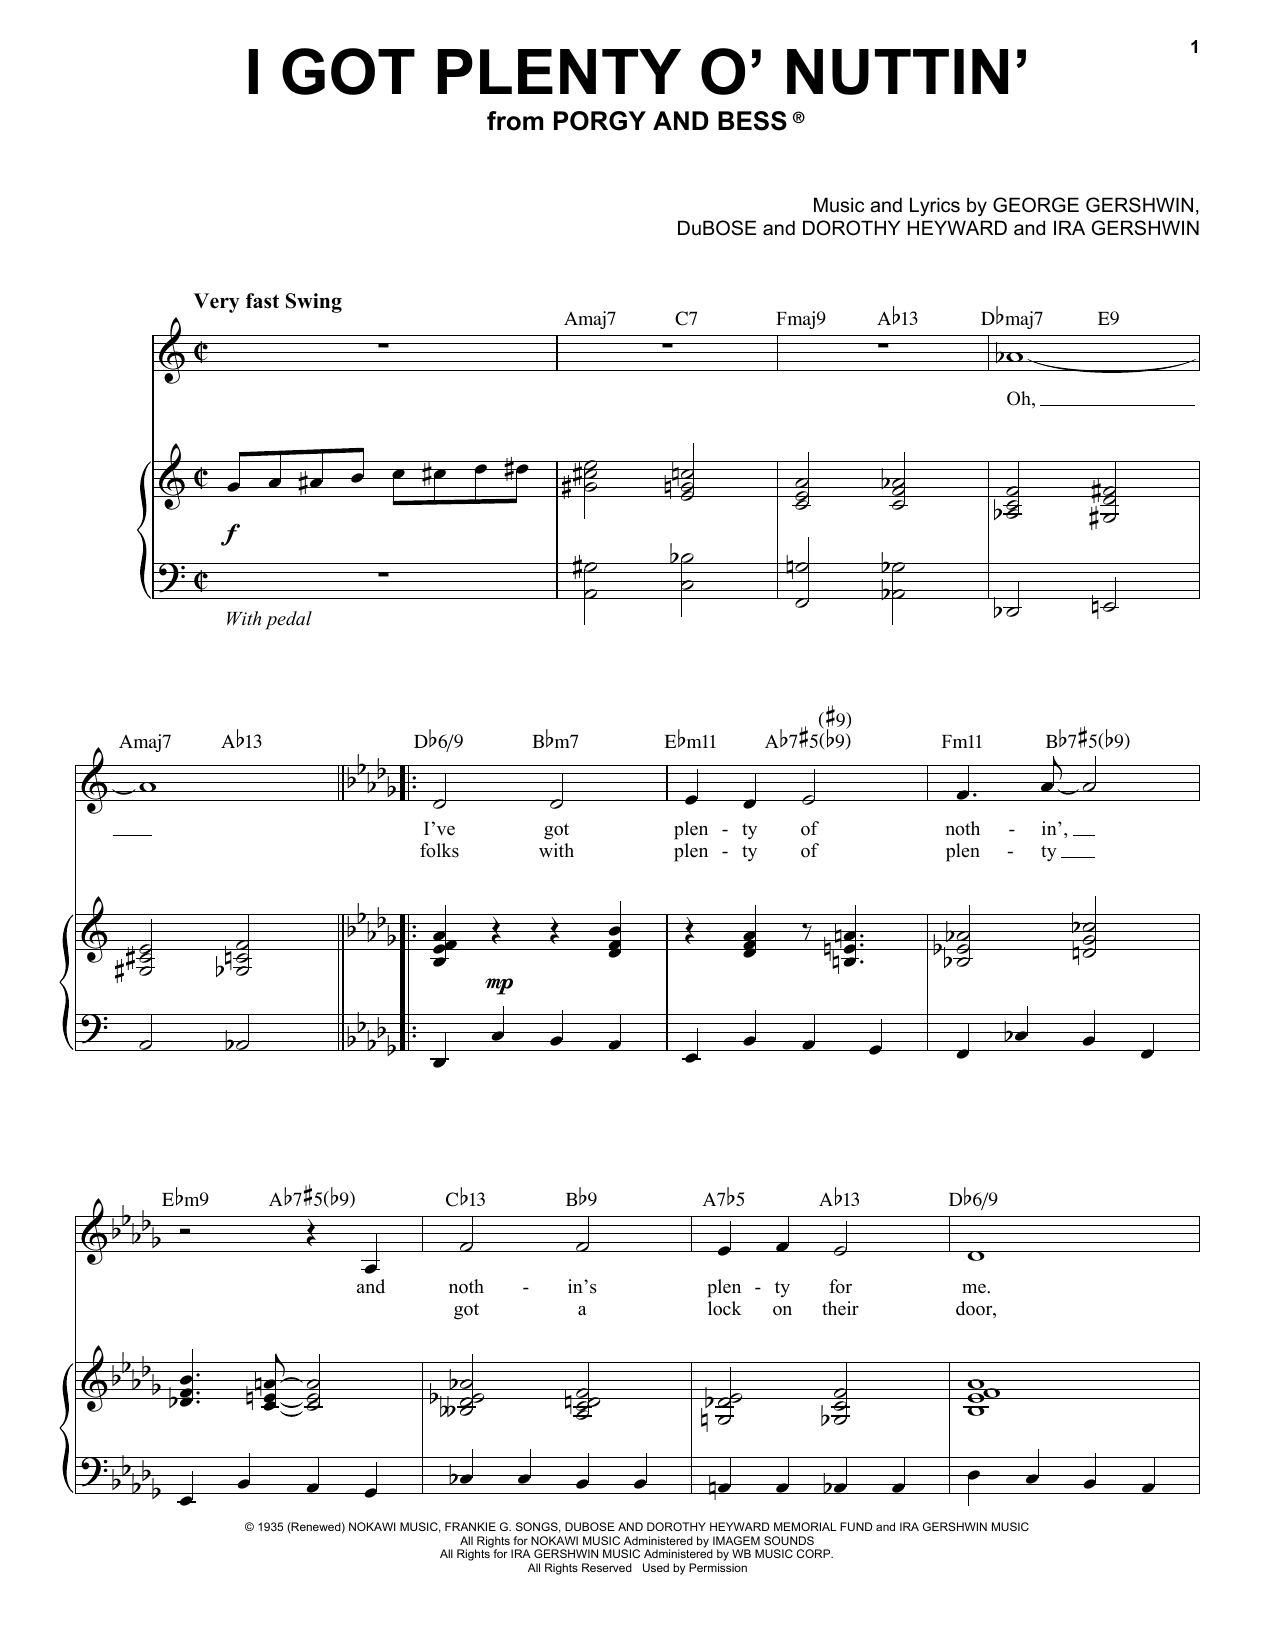 Download George Gershwin I Got Plenty O' Nuttin' Sheet Music and learn how to play Trombone PDF digital score in minutes